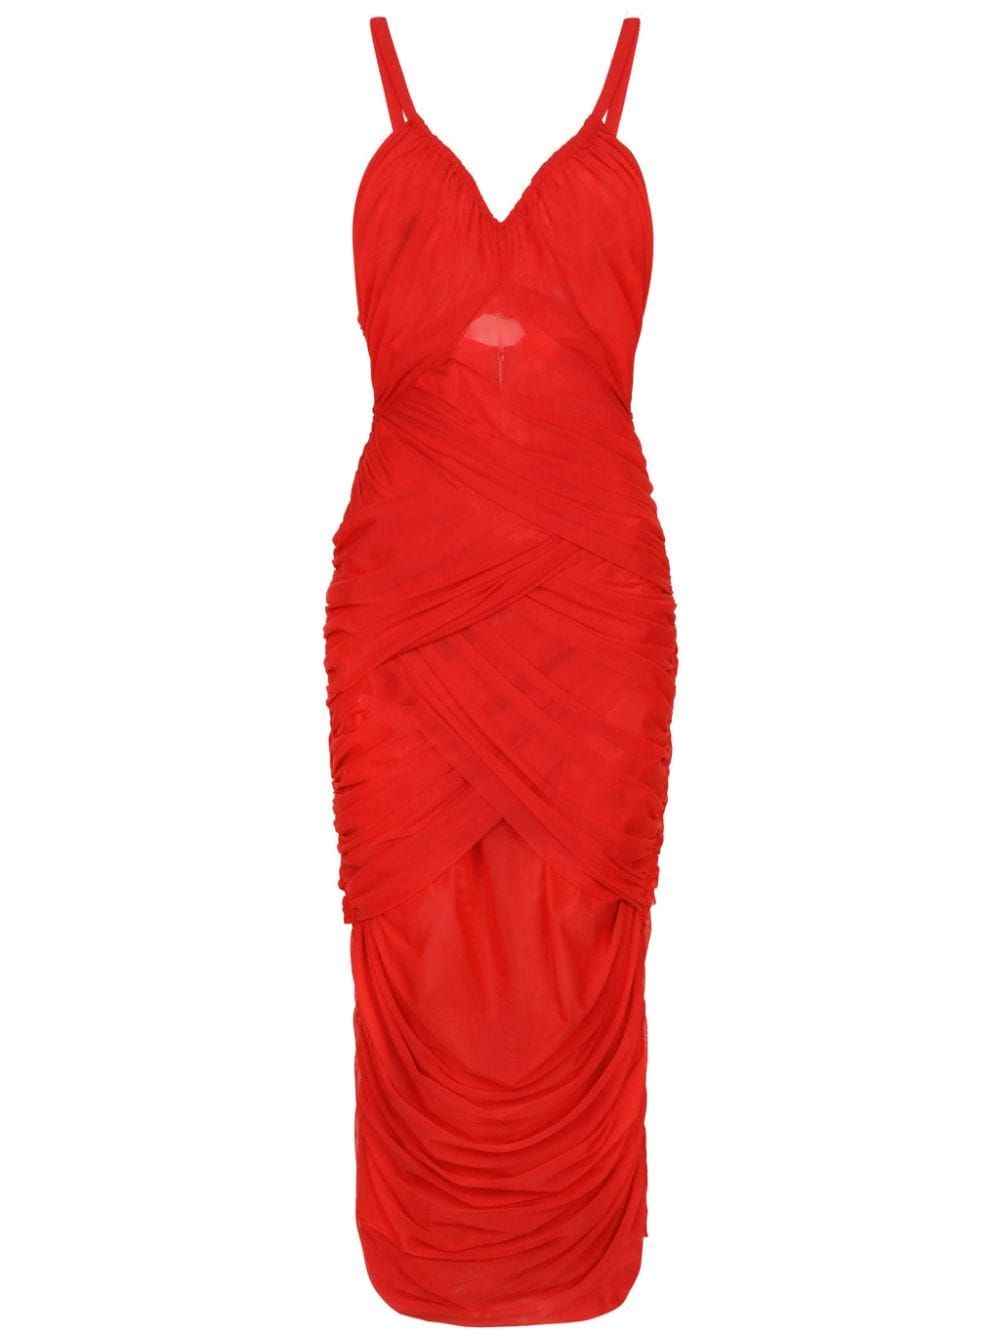 Dolce & Gabbana Flattering Red Tulle Dress | Draped Midi | V-neckline | Women's Fashion